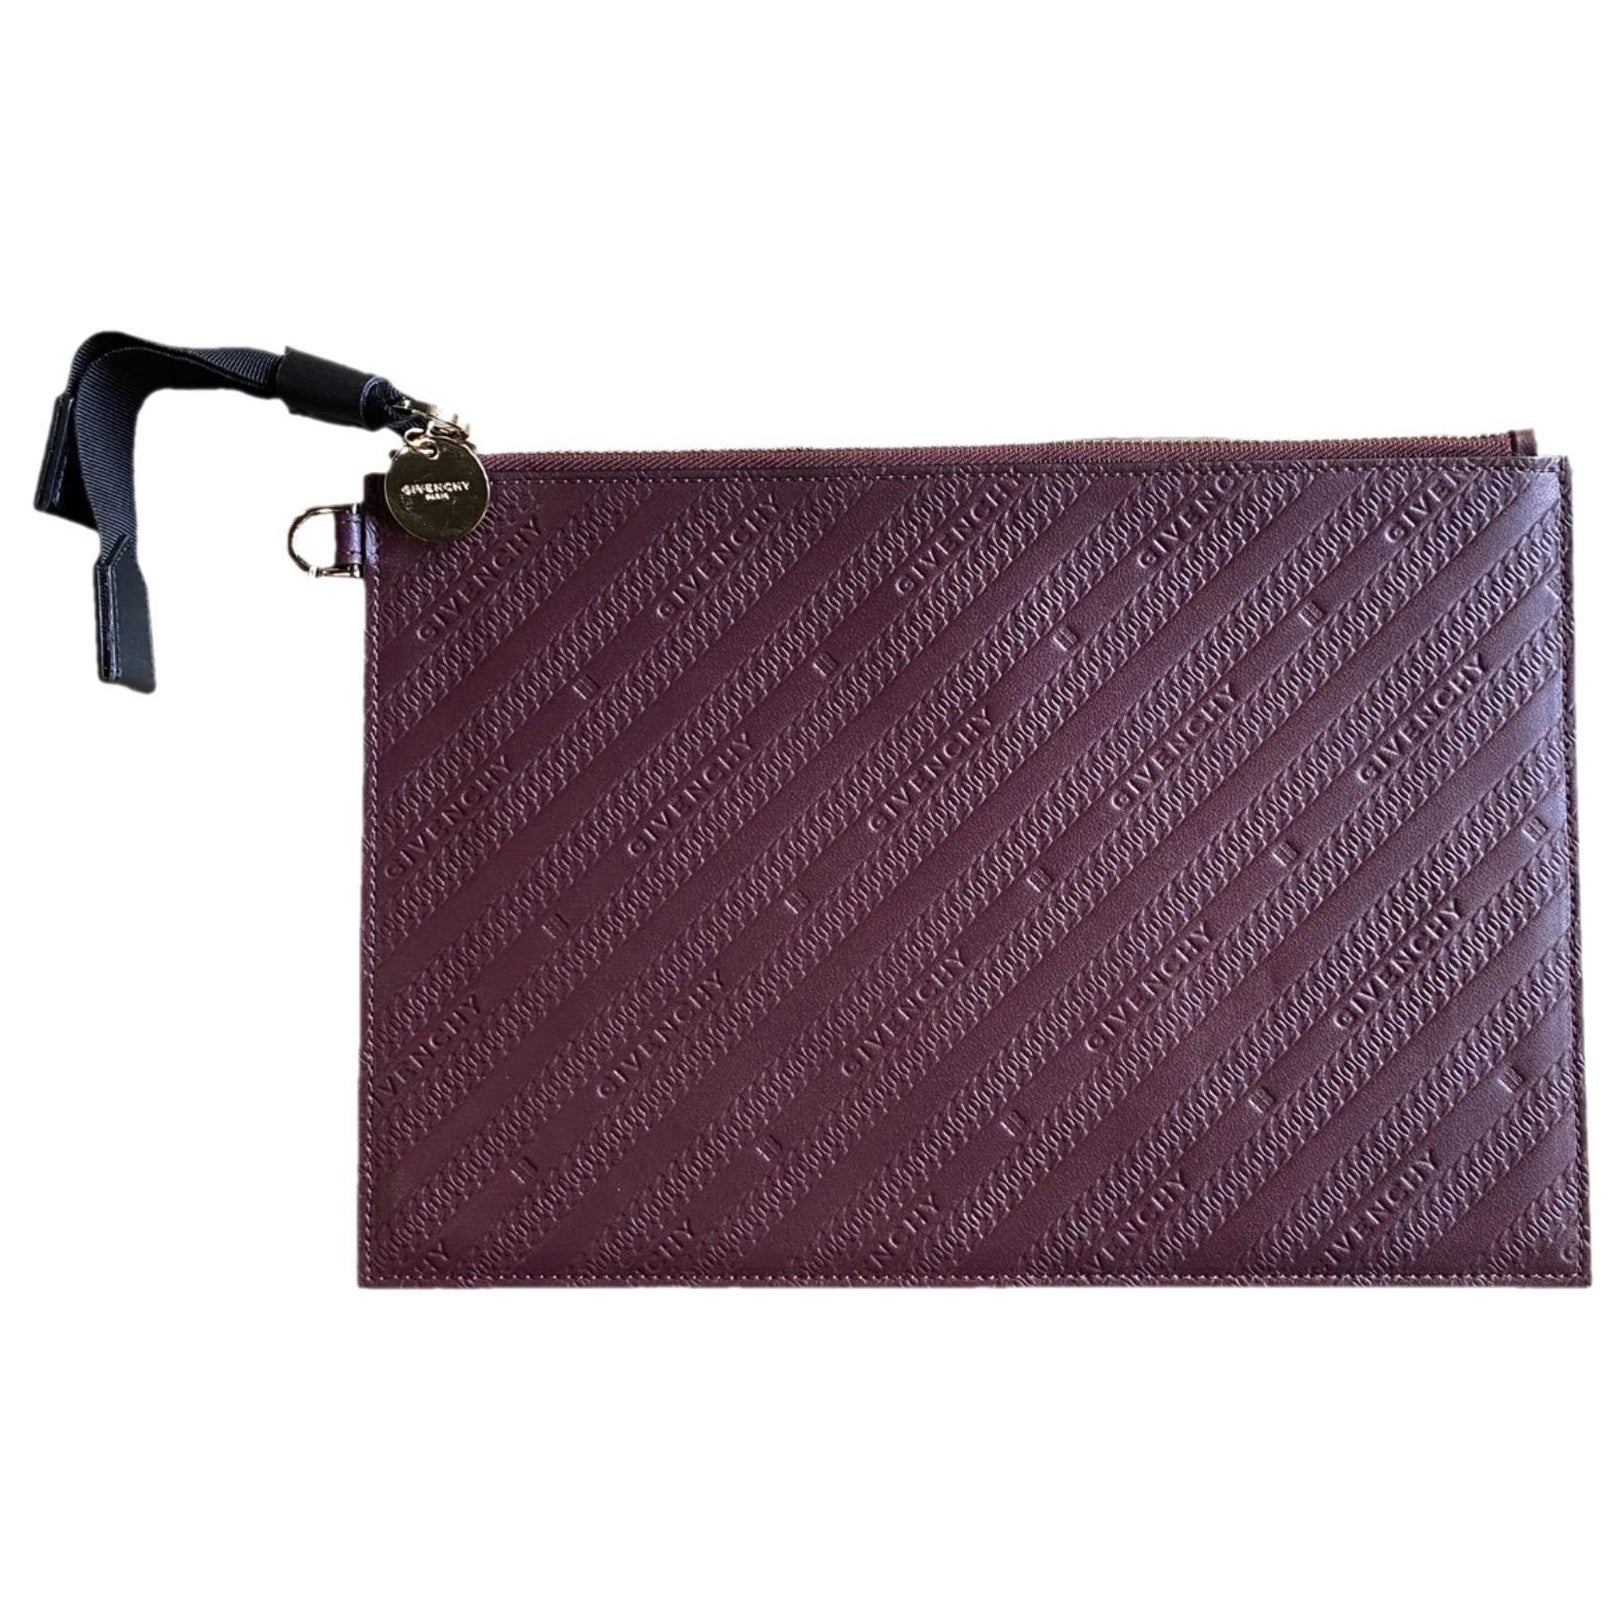 Givenchy burgundi leather Clutch Bag